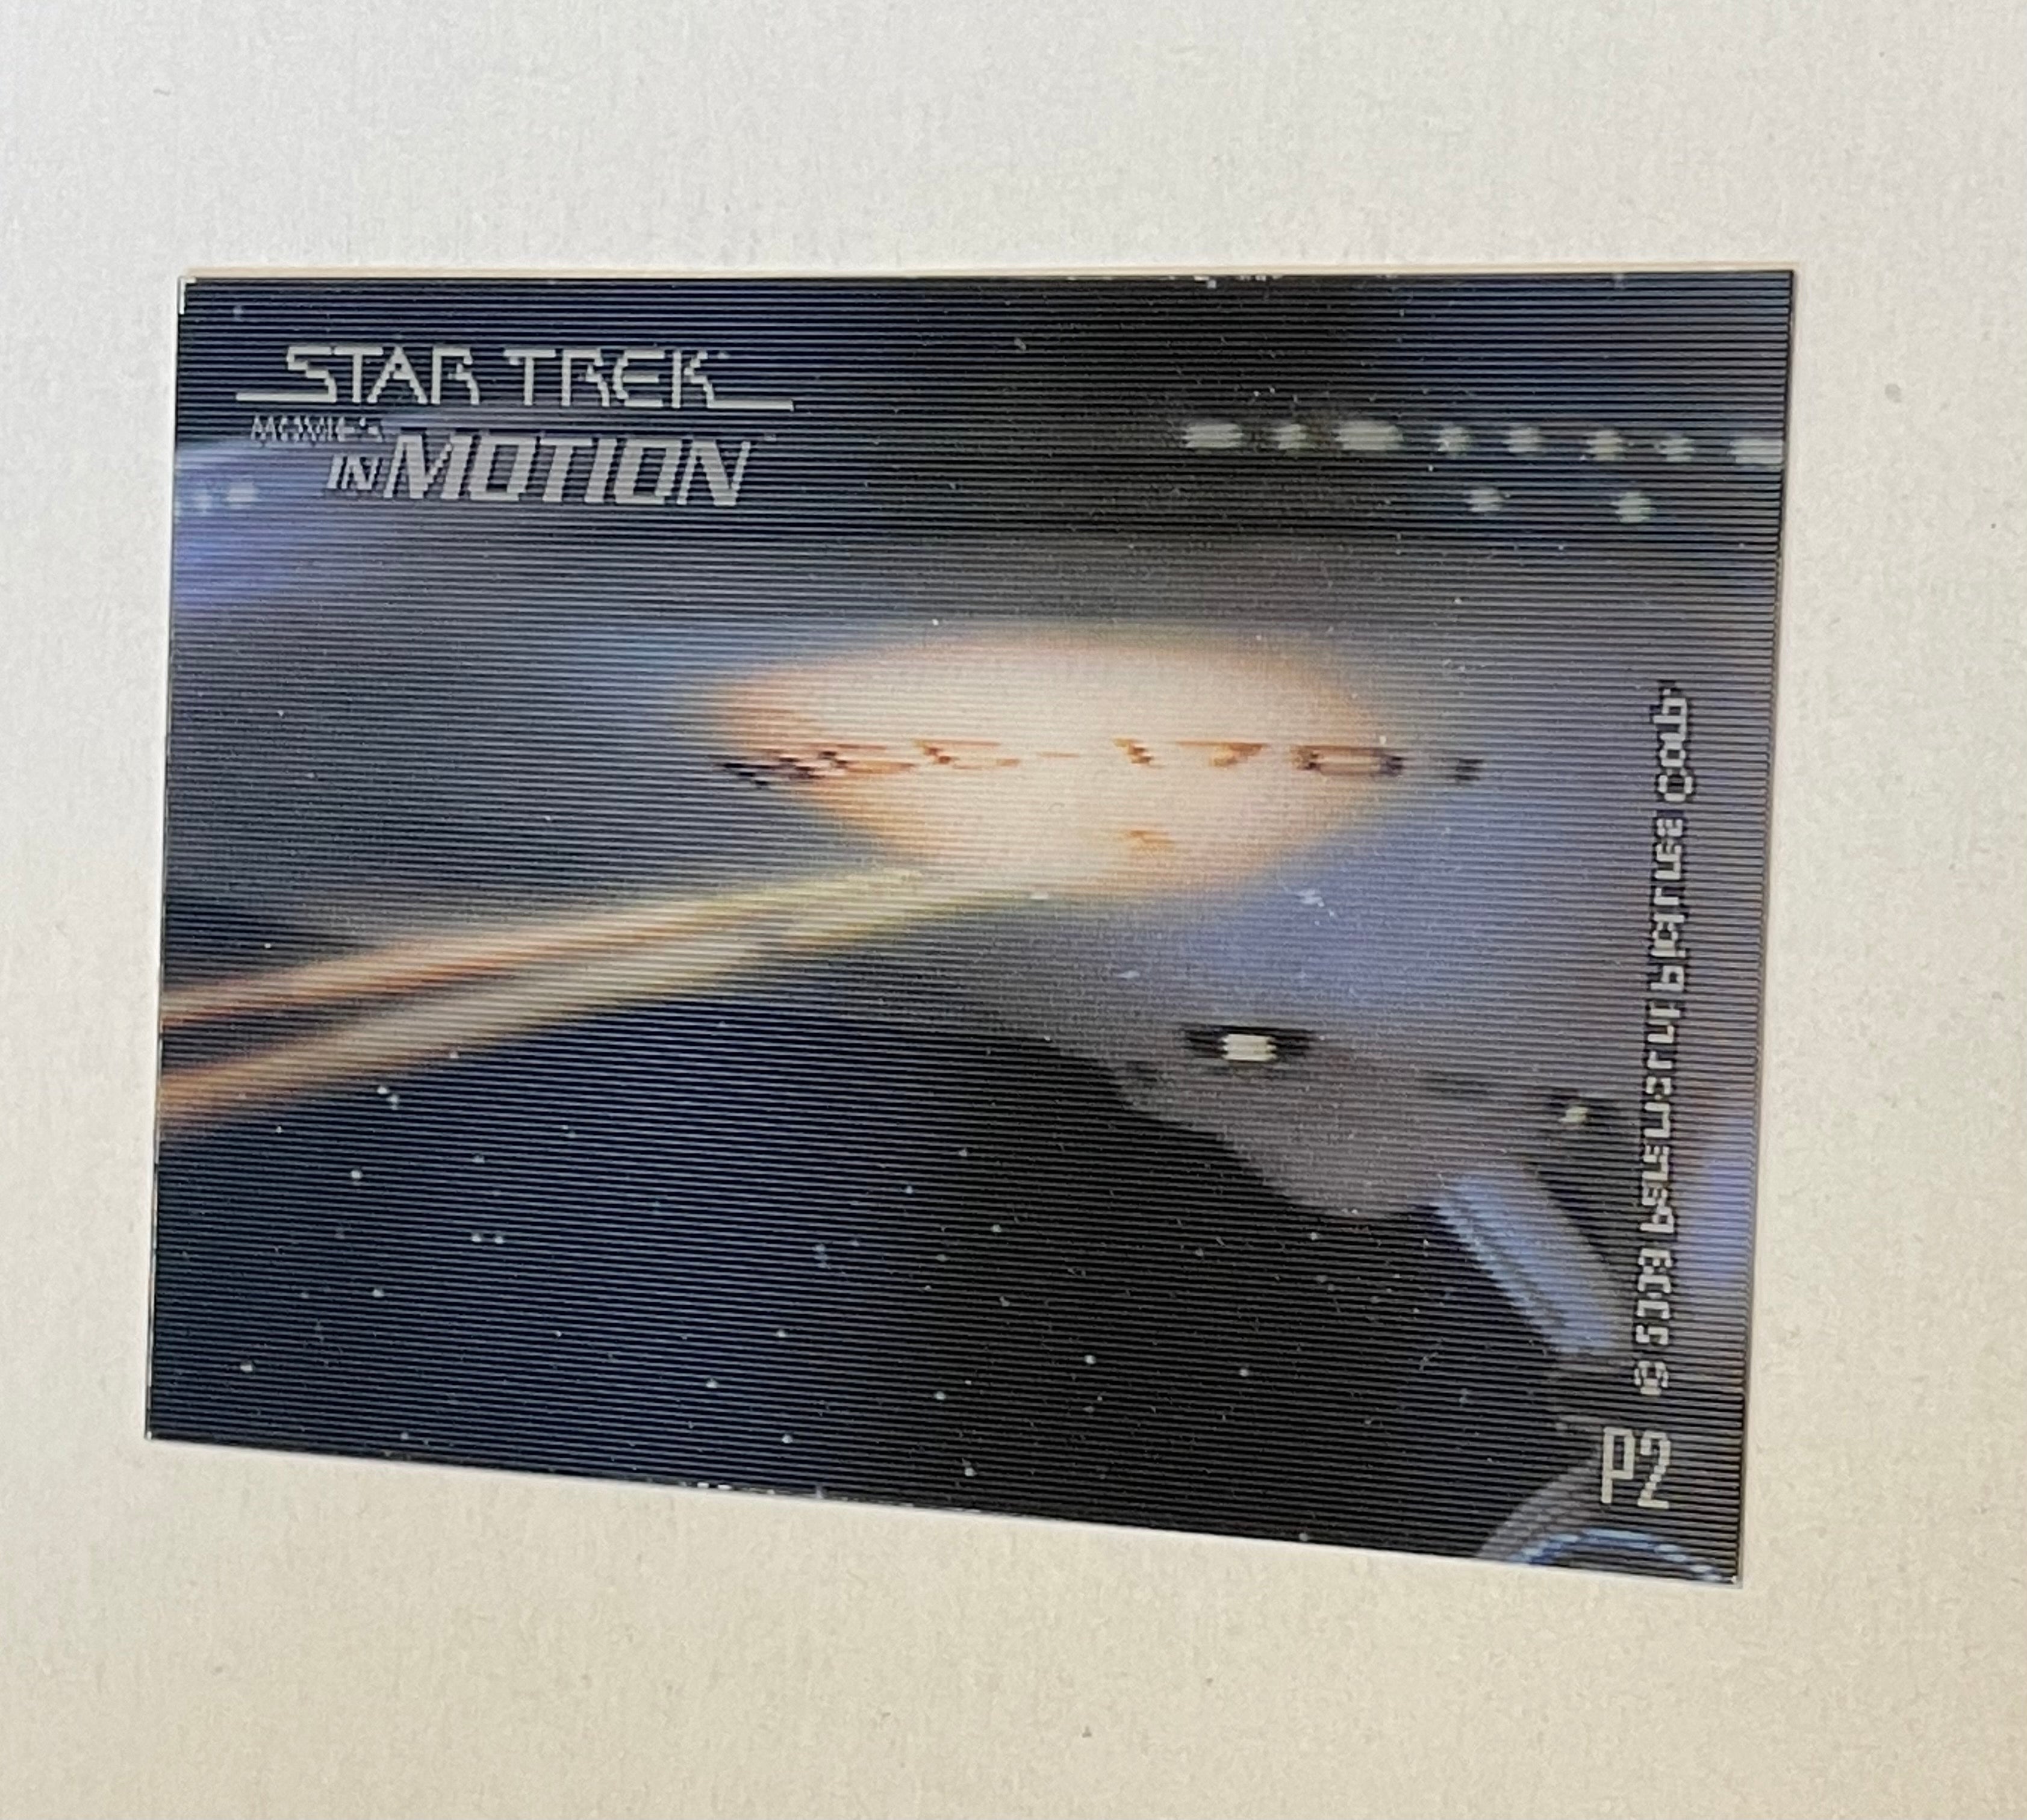 Star Trek movies in motion Lenticular rare p2 card